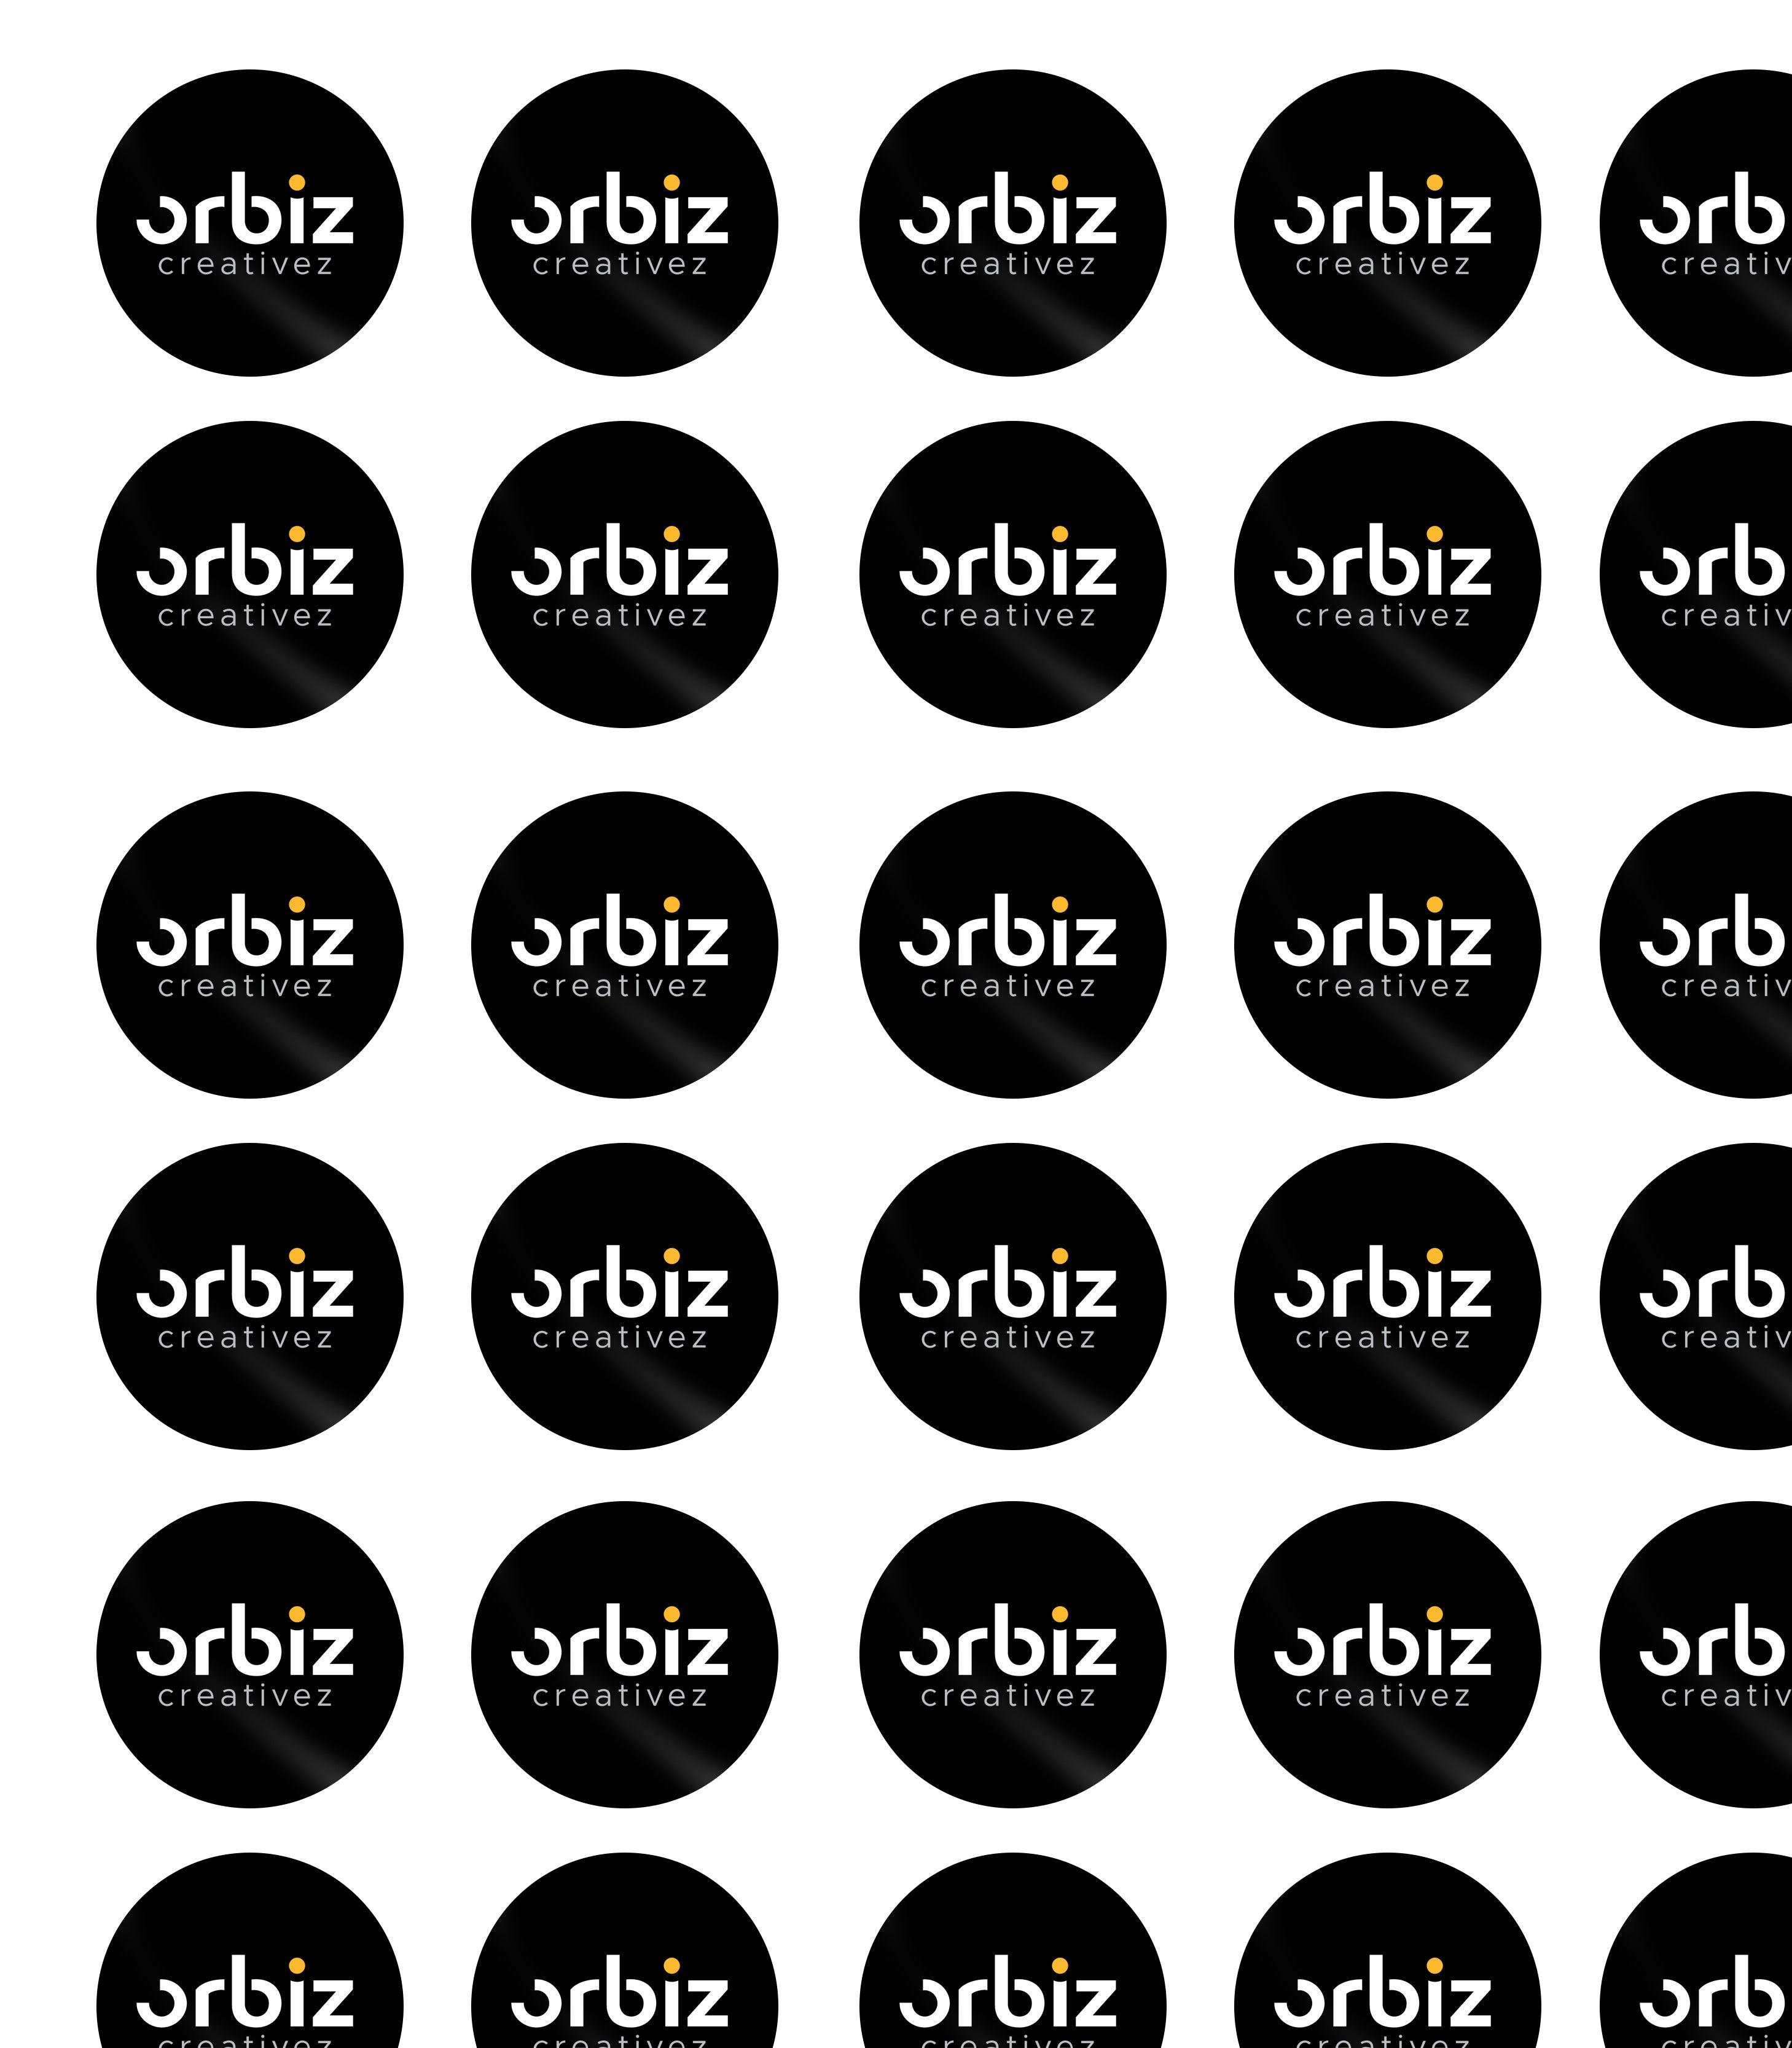 Branded clear sticker - Orbiz Creativez